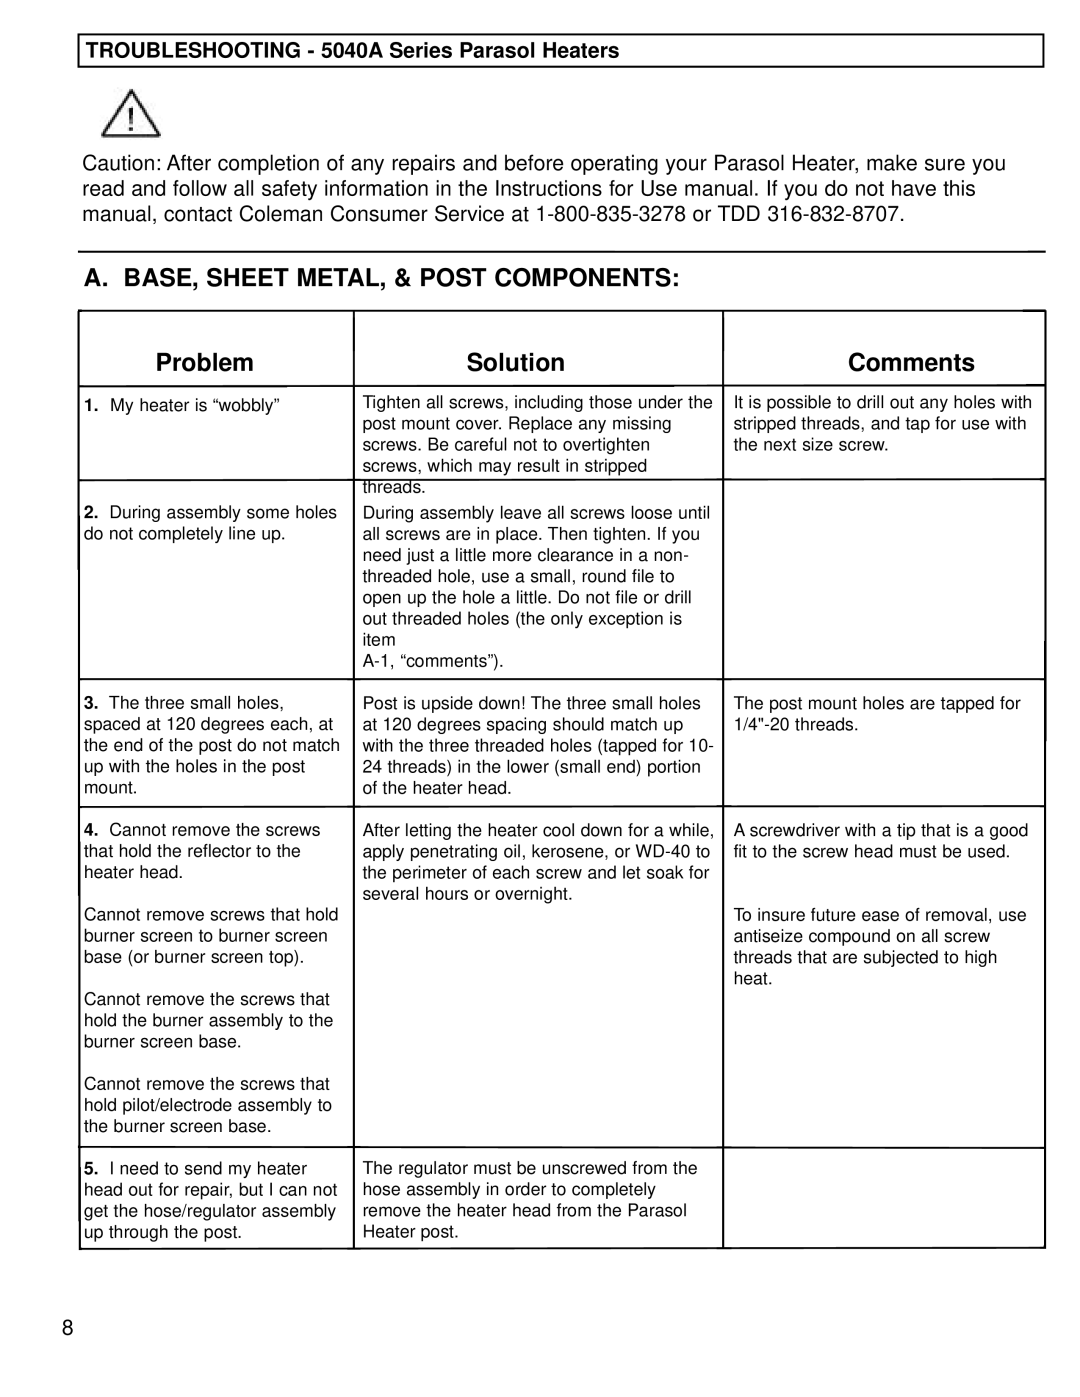 Coleman 5040 manual A. Base, Sheet Metal, & Post Components, Problem, Solution, Comments 